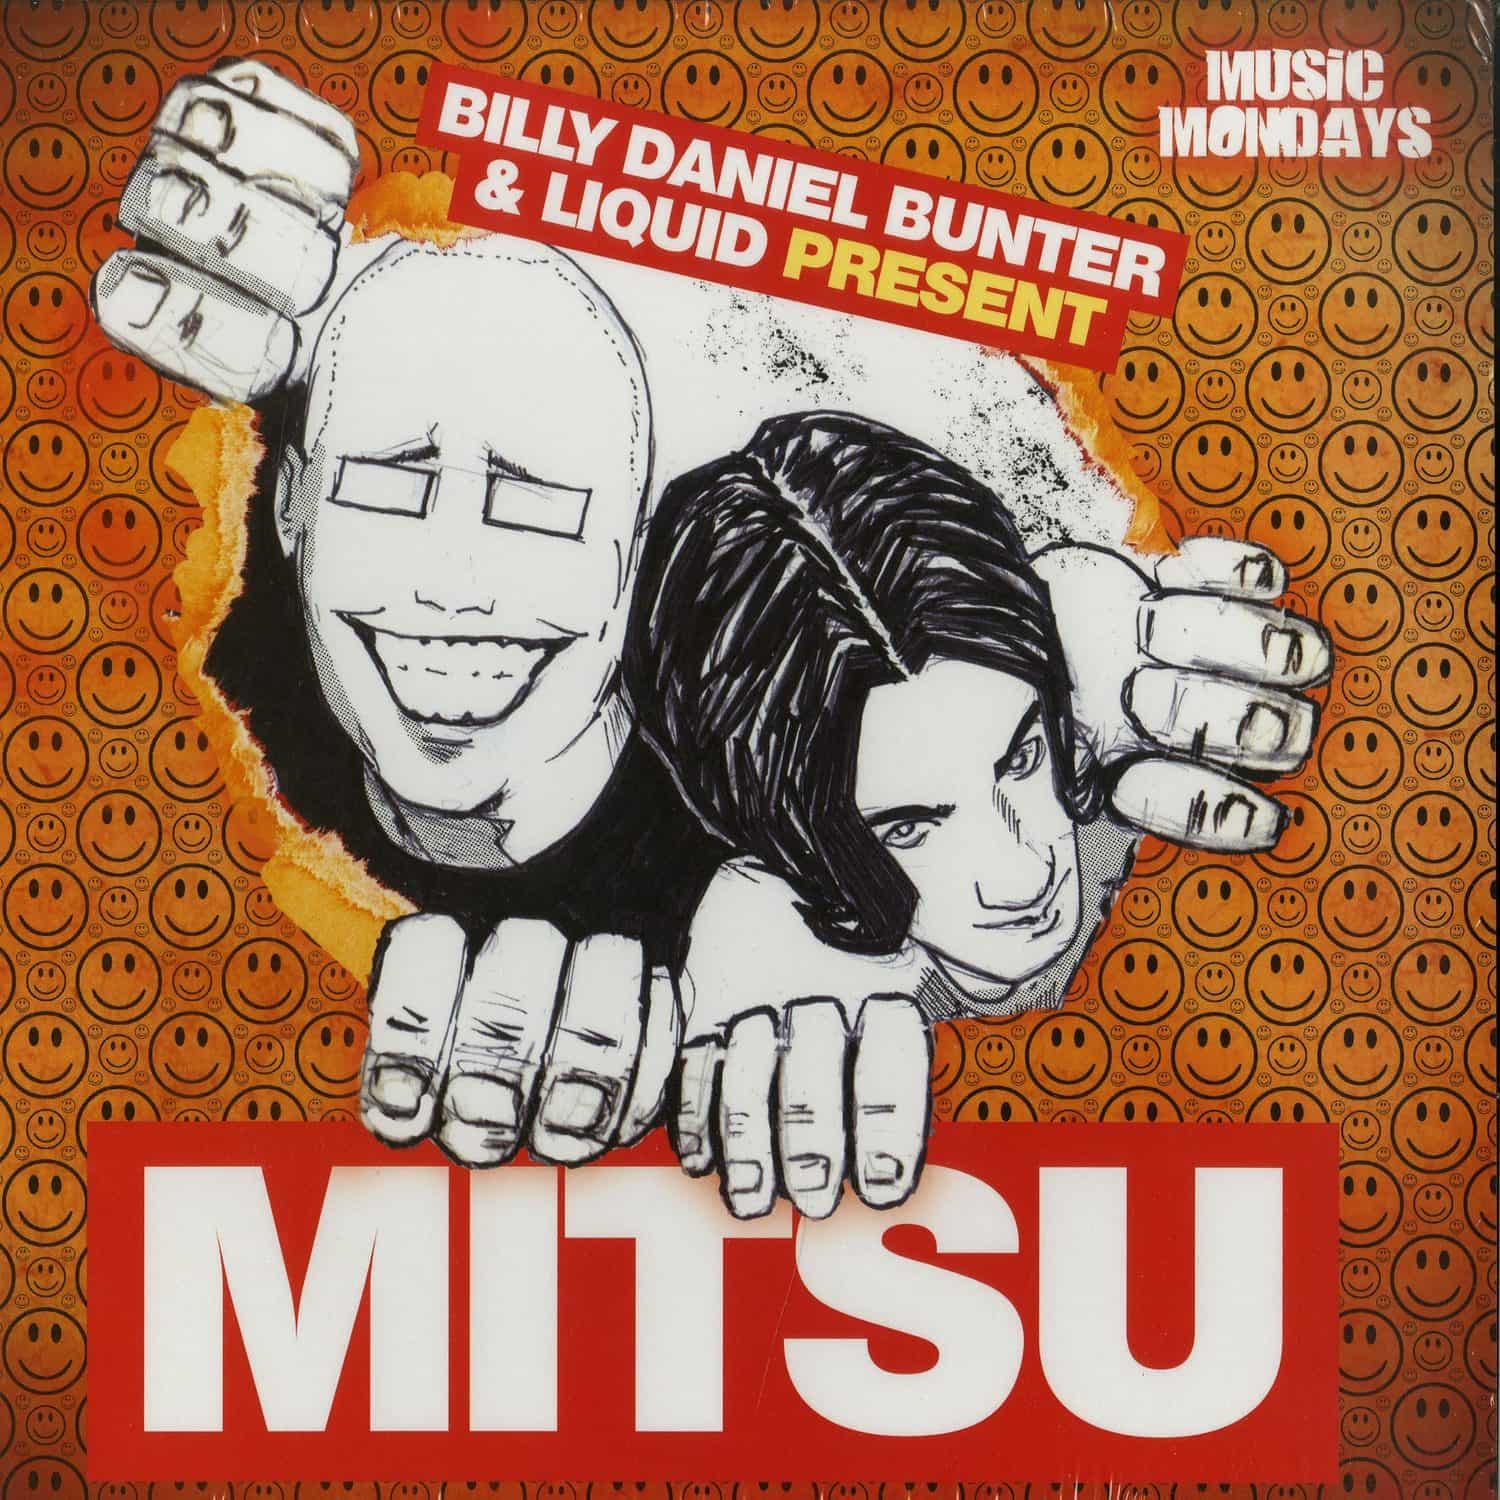 Billy Daniel Bunter and Liquid - MITSU